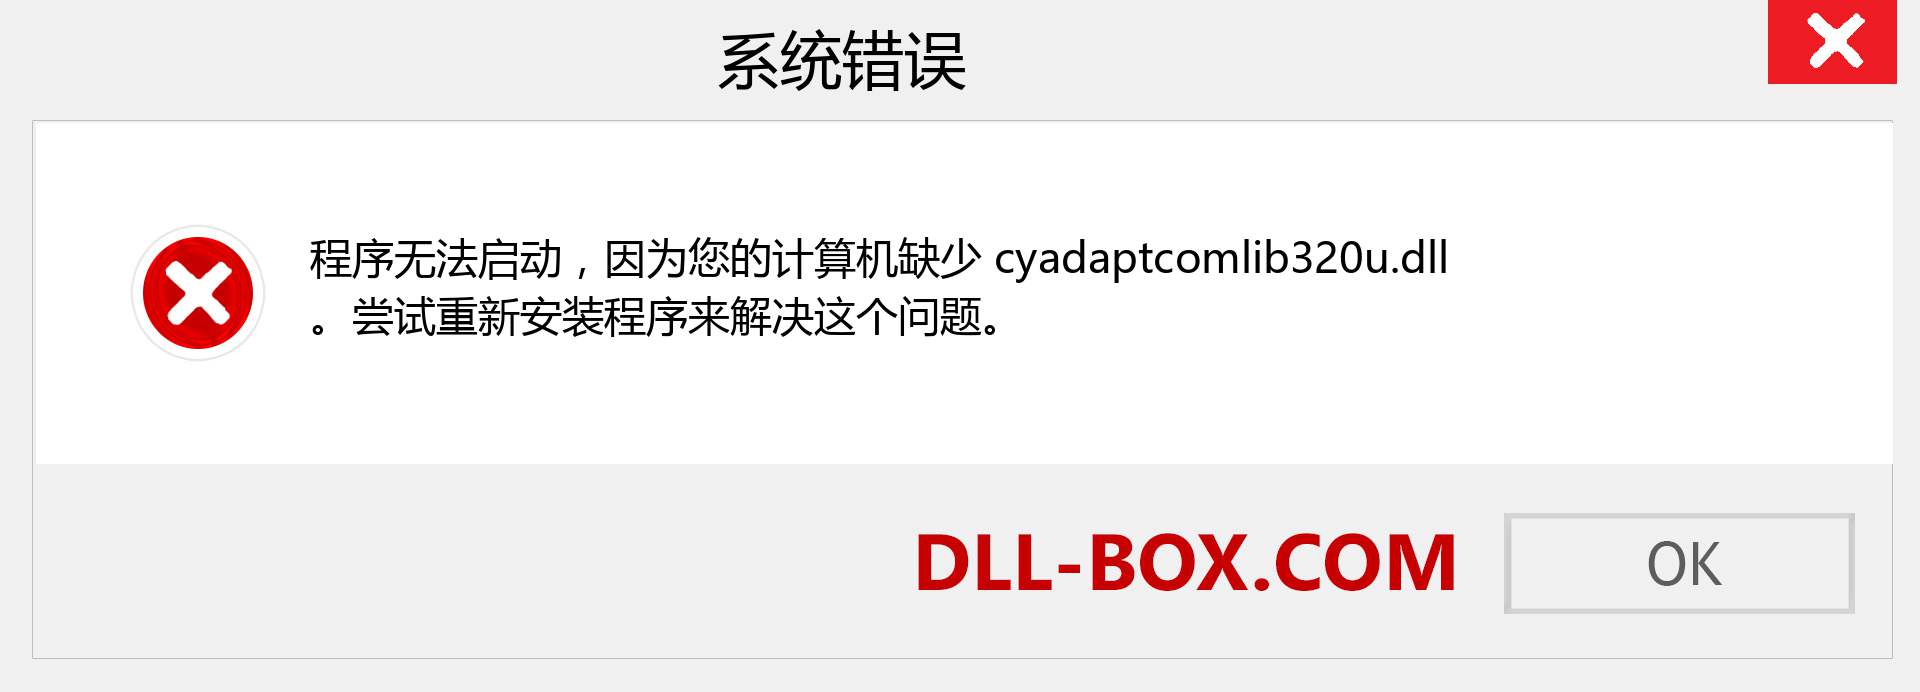 cyadaptcomlib320u.dll 文件丢失？。 适用于 Windows 7、8、10 的下载 - 修复 Windows、照片、图像上的 cyadaptcomlib320u dll 丢失错误